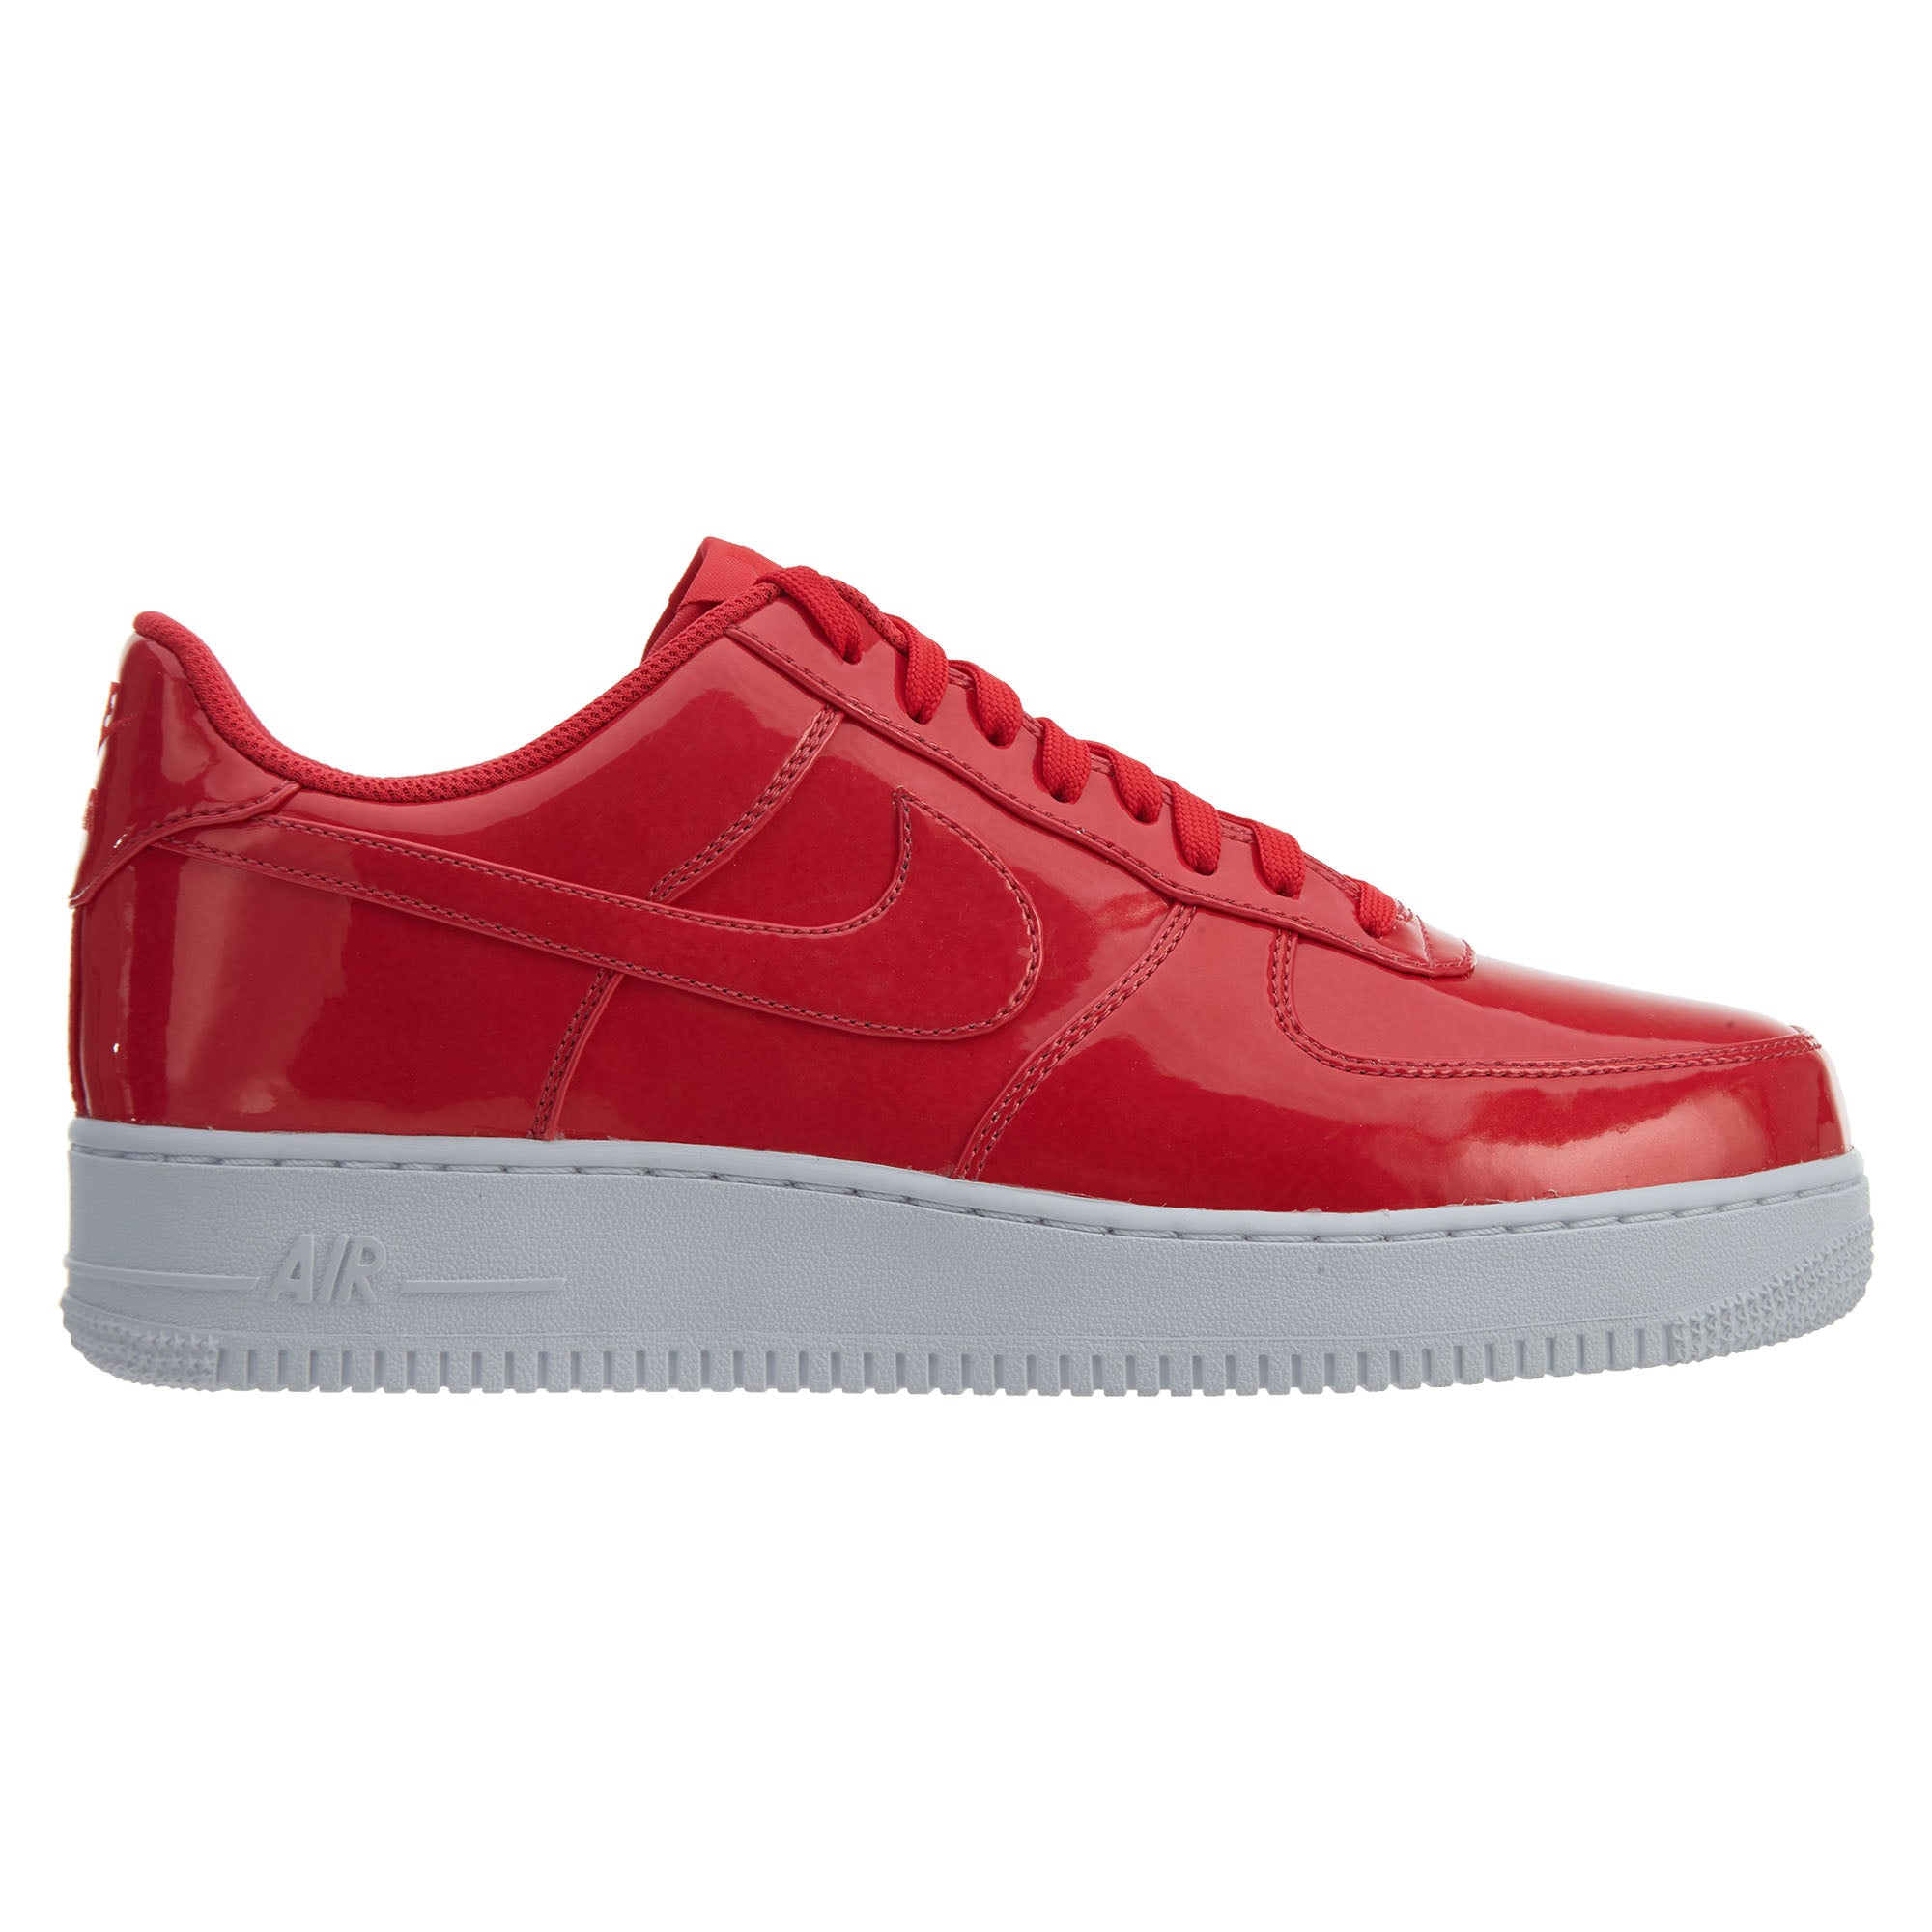 Nike Air Force 1 Low Ultraviolet Siren Red Mens Sneaker Style AJ9505-600